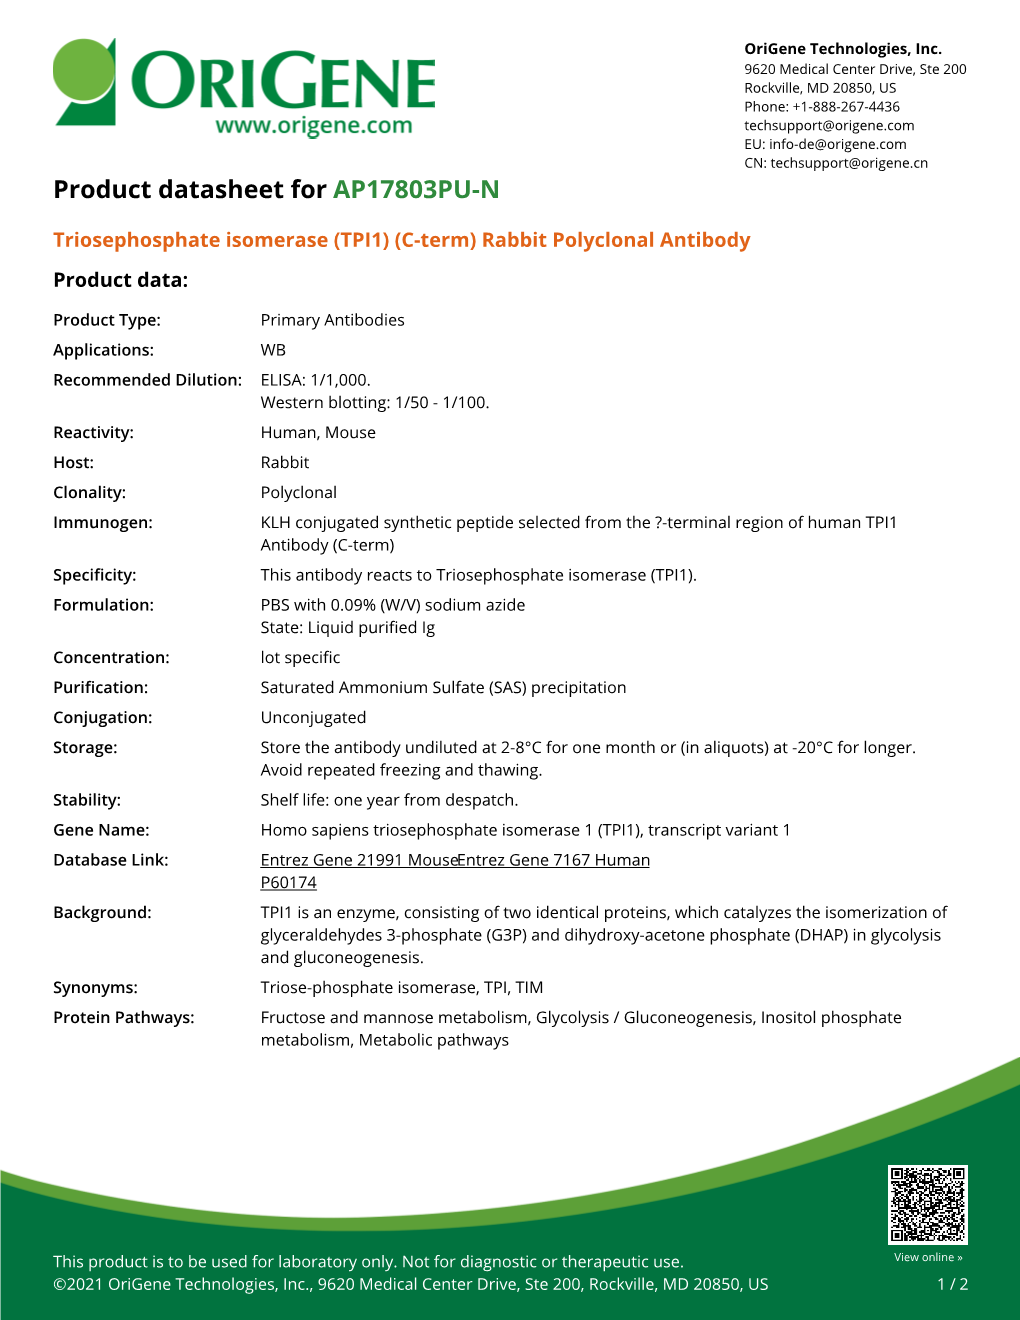 Triosephosphate Isomerase (TPI1) (C-Term) Rabbit Polyclonal Antibody Product Data